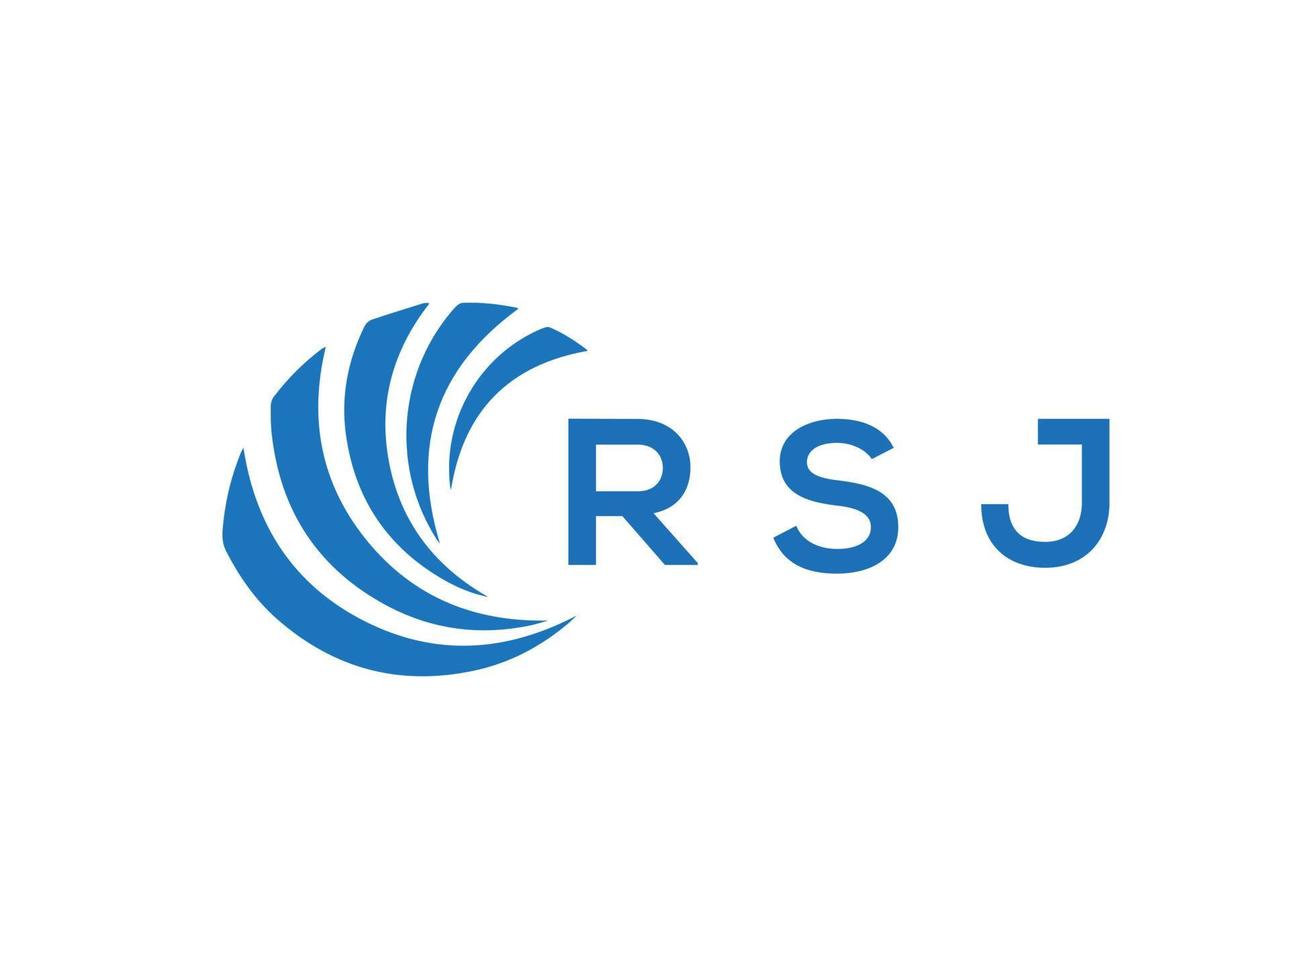 rsj letra logo diseño en blanco antecedentes. rsj creativo circulo letra logo concepto. rsj letra diseño. vector